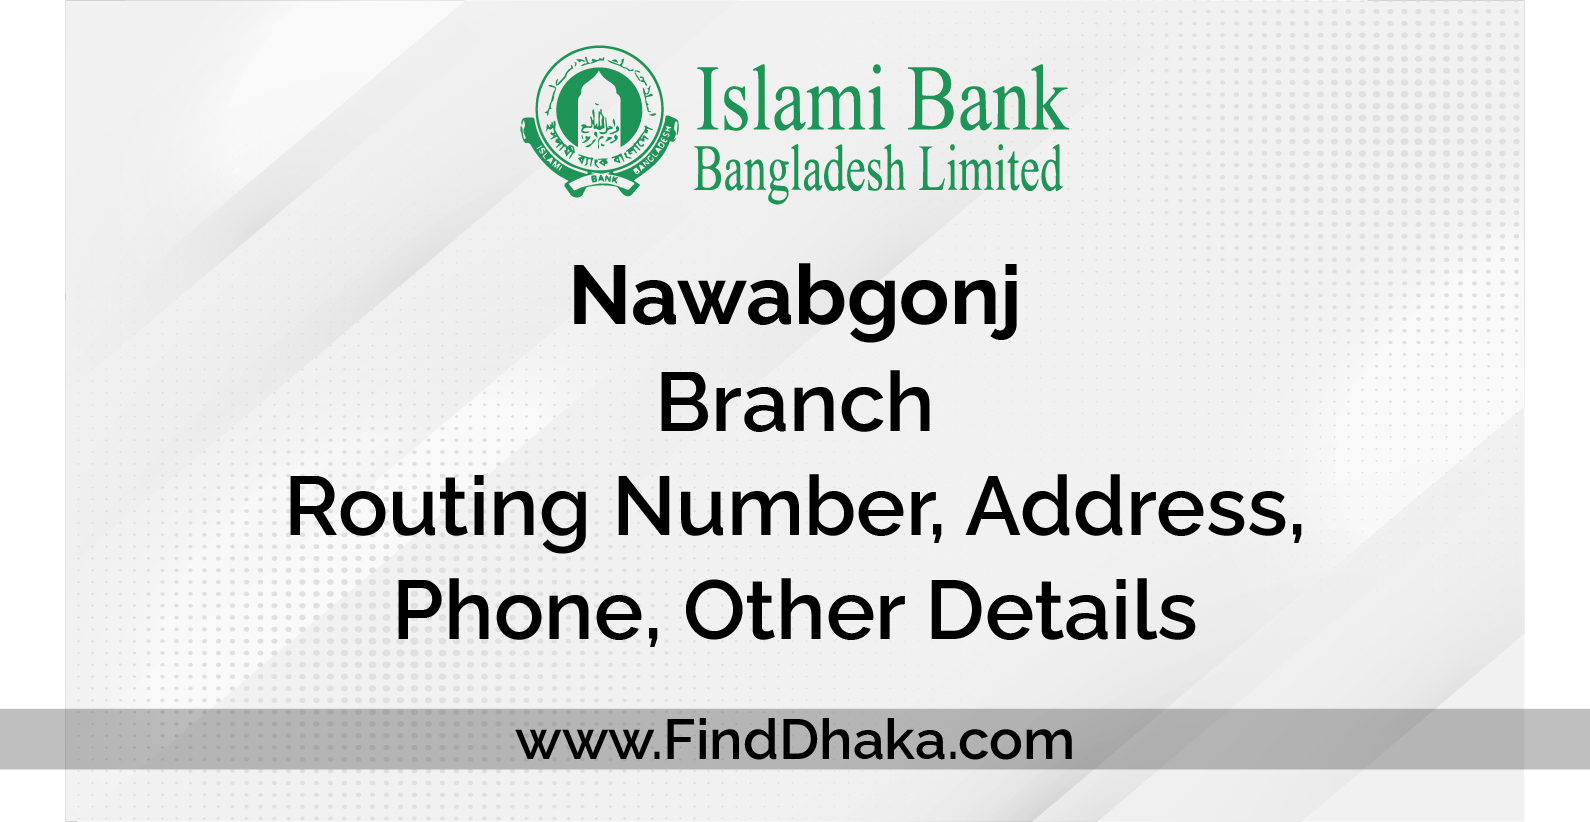 Islami Bank info016000